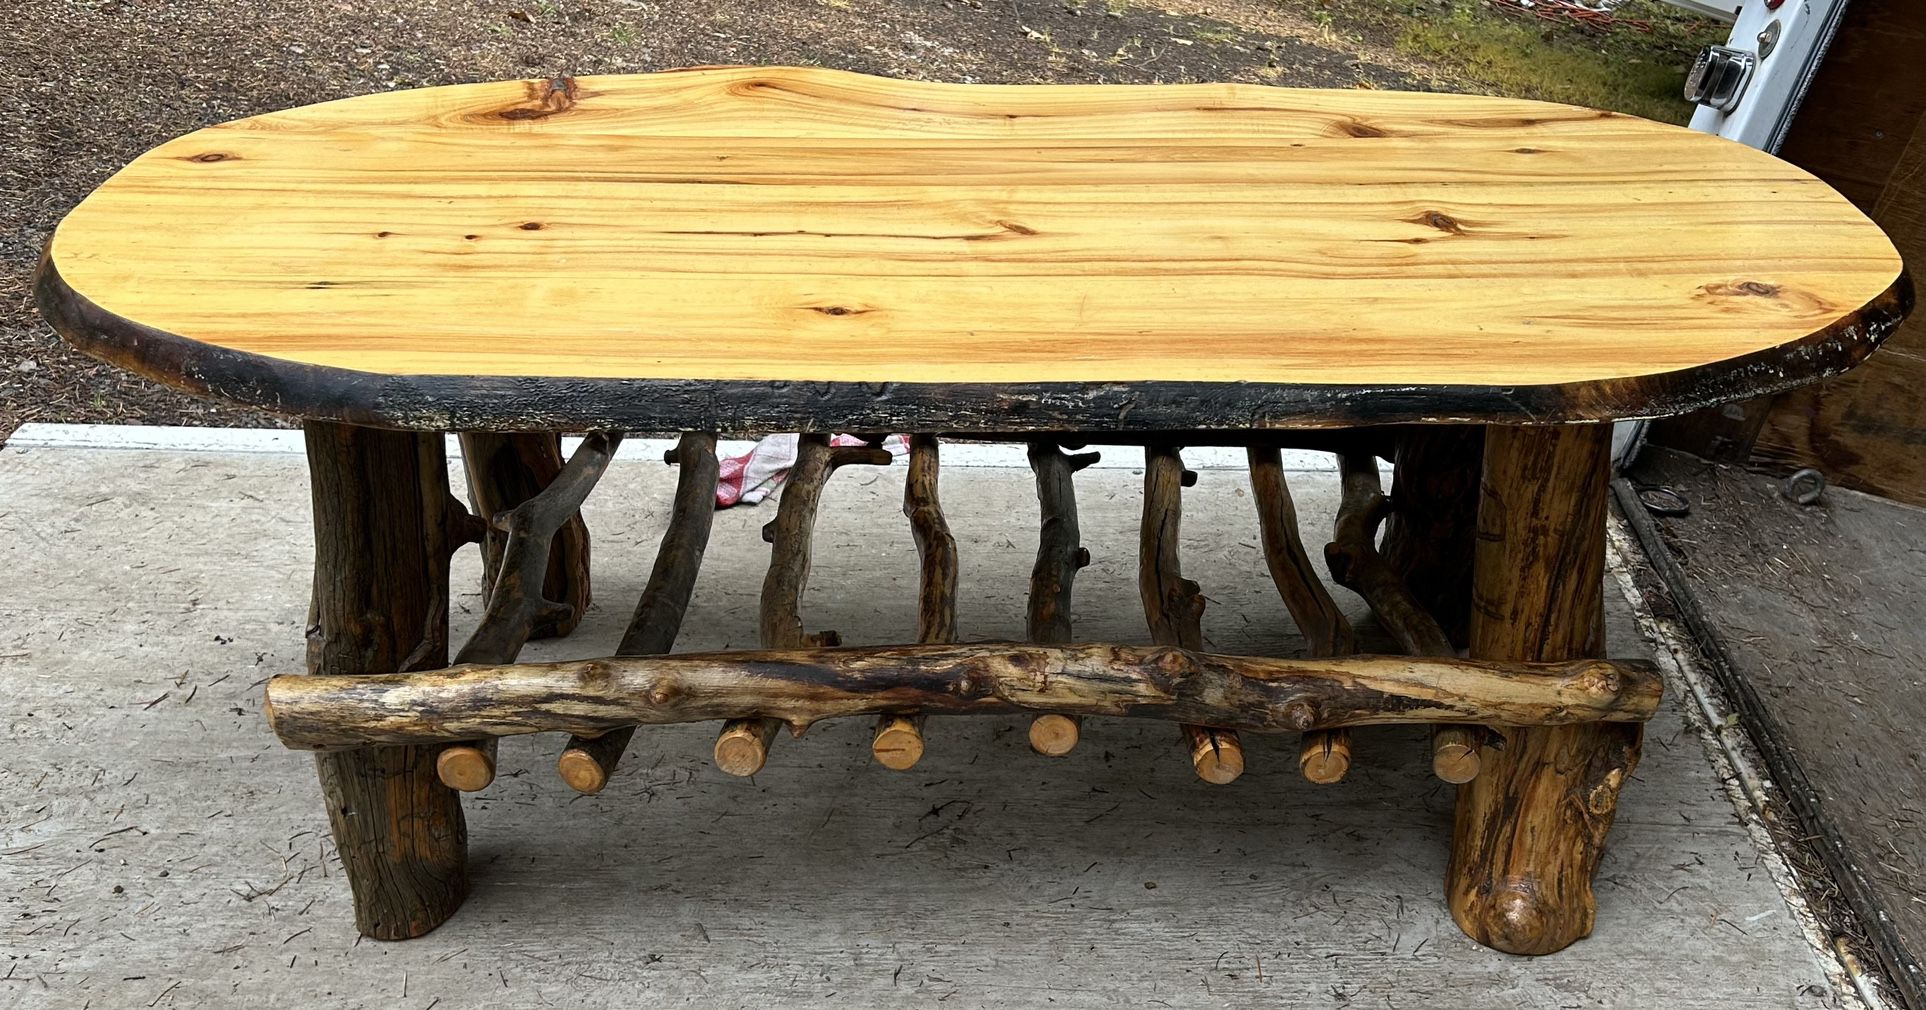 Rustic Log, Wood Table